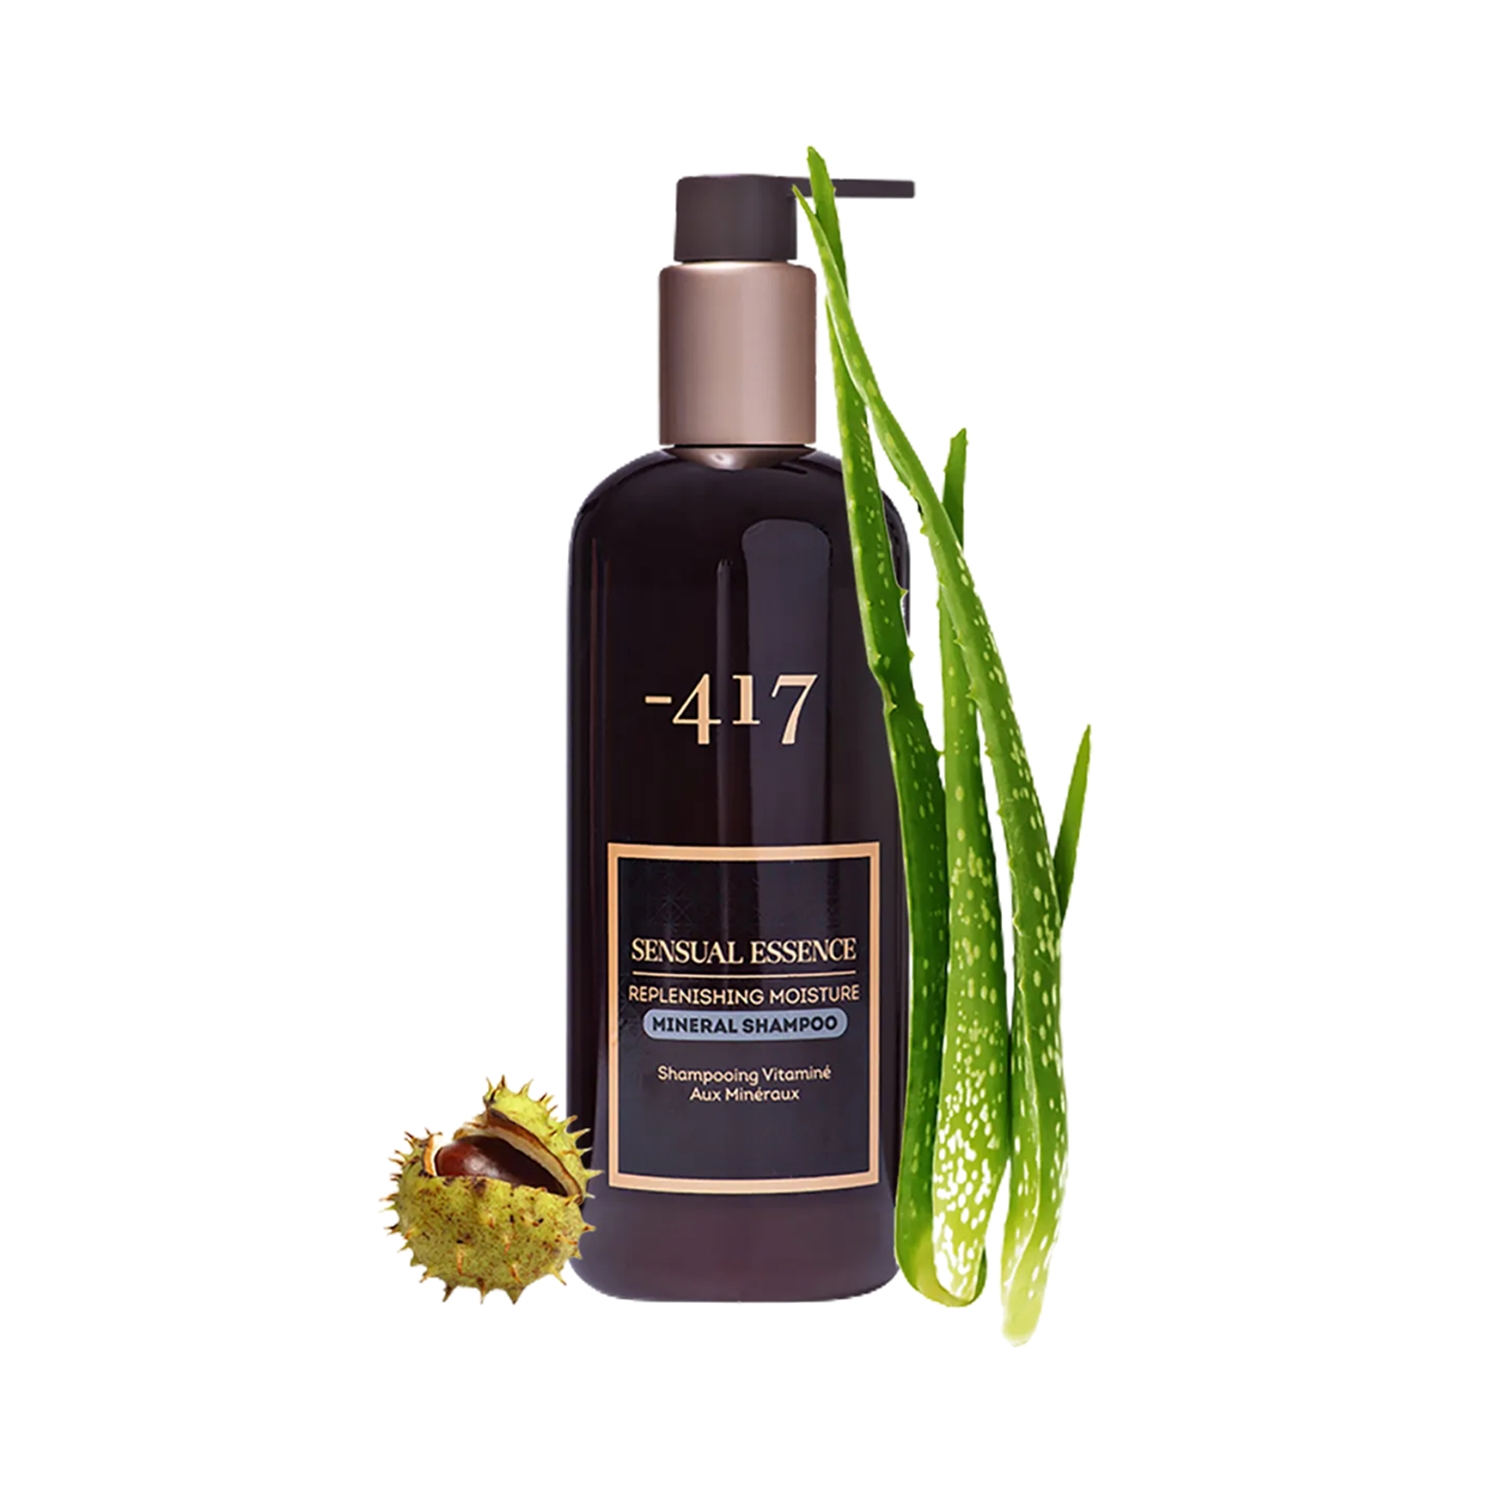 Minus 417 Sensual Essence Replenishing Moisture Mineral Shampoo (350ml)